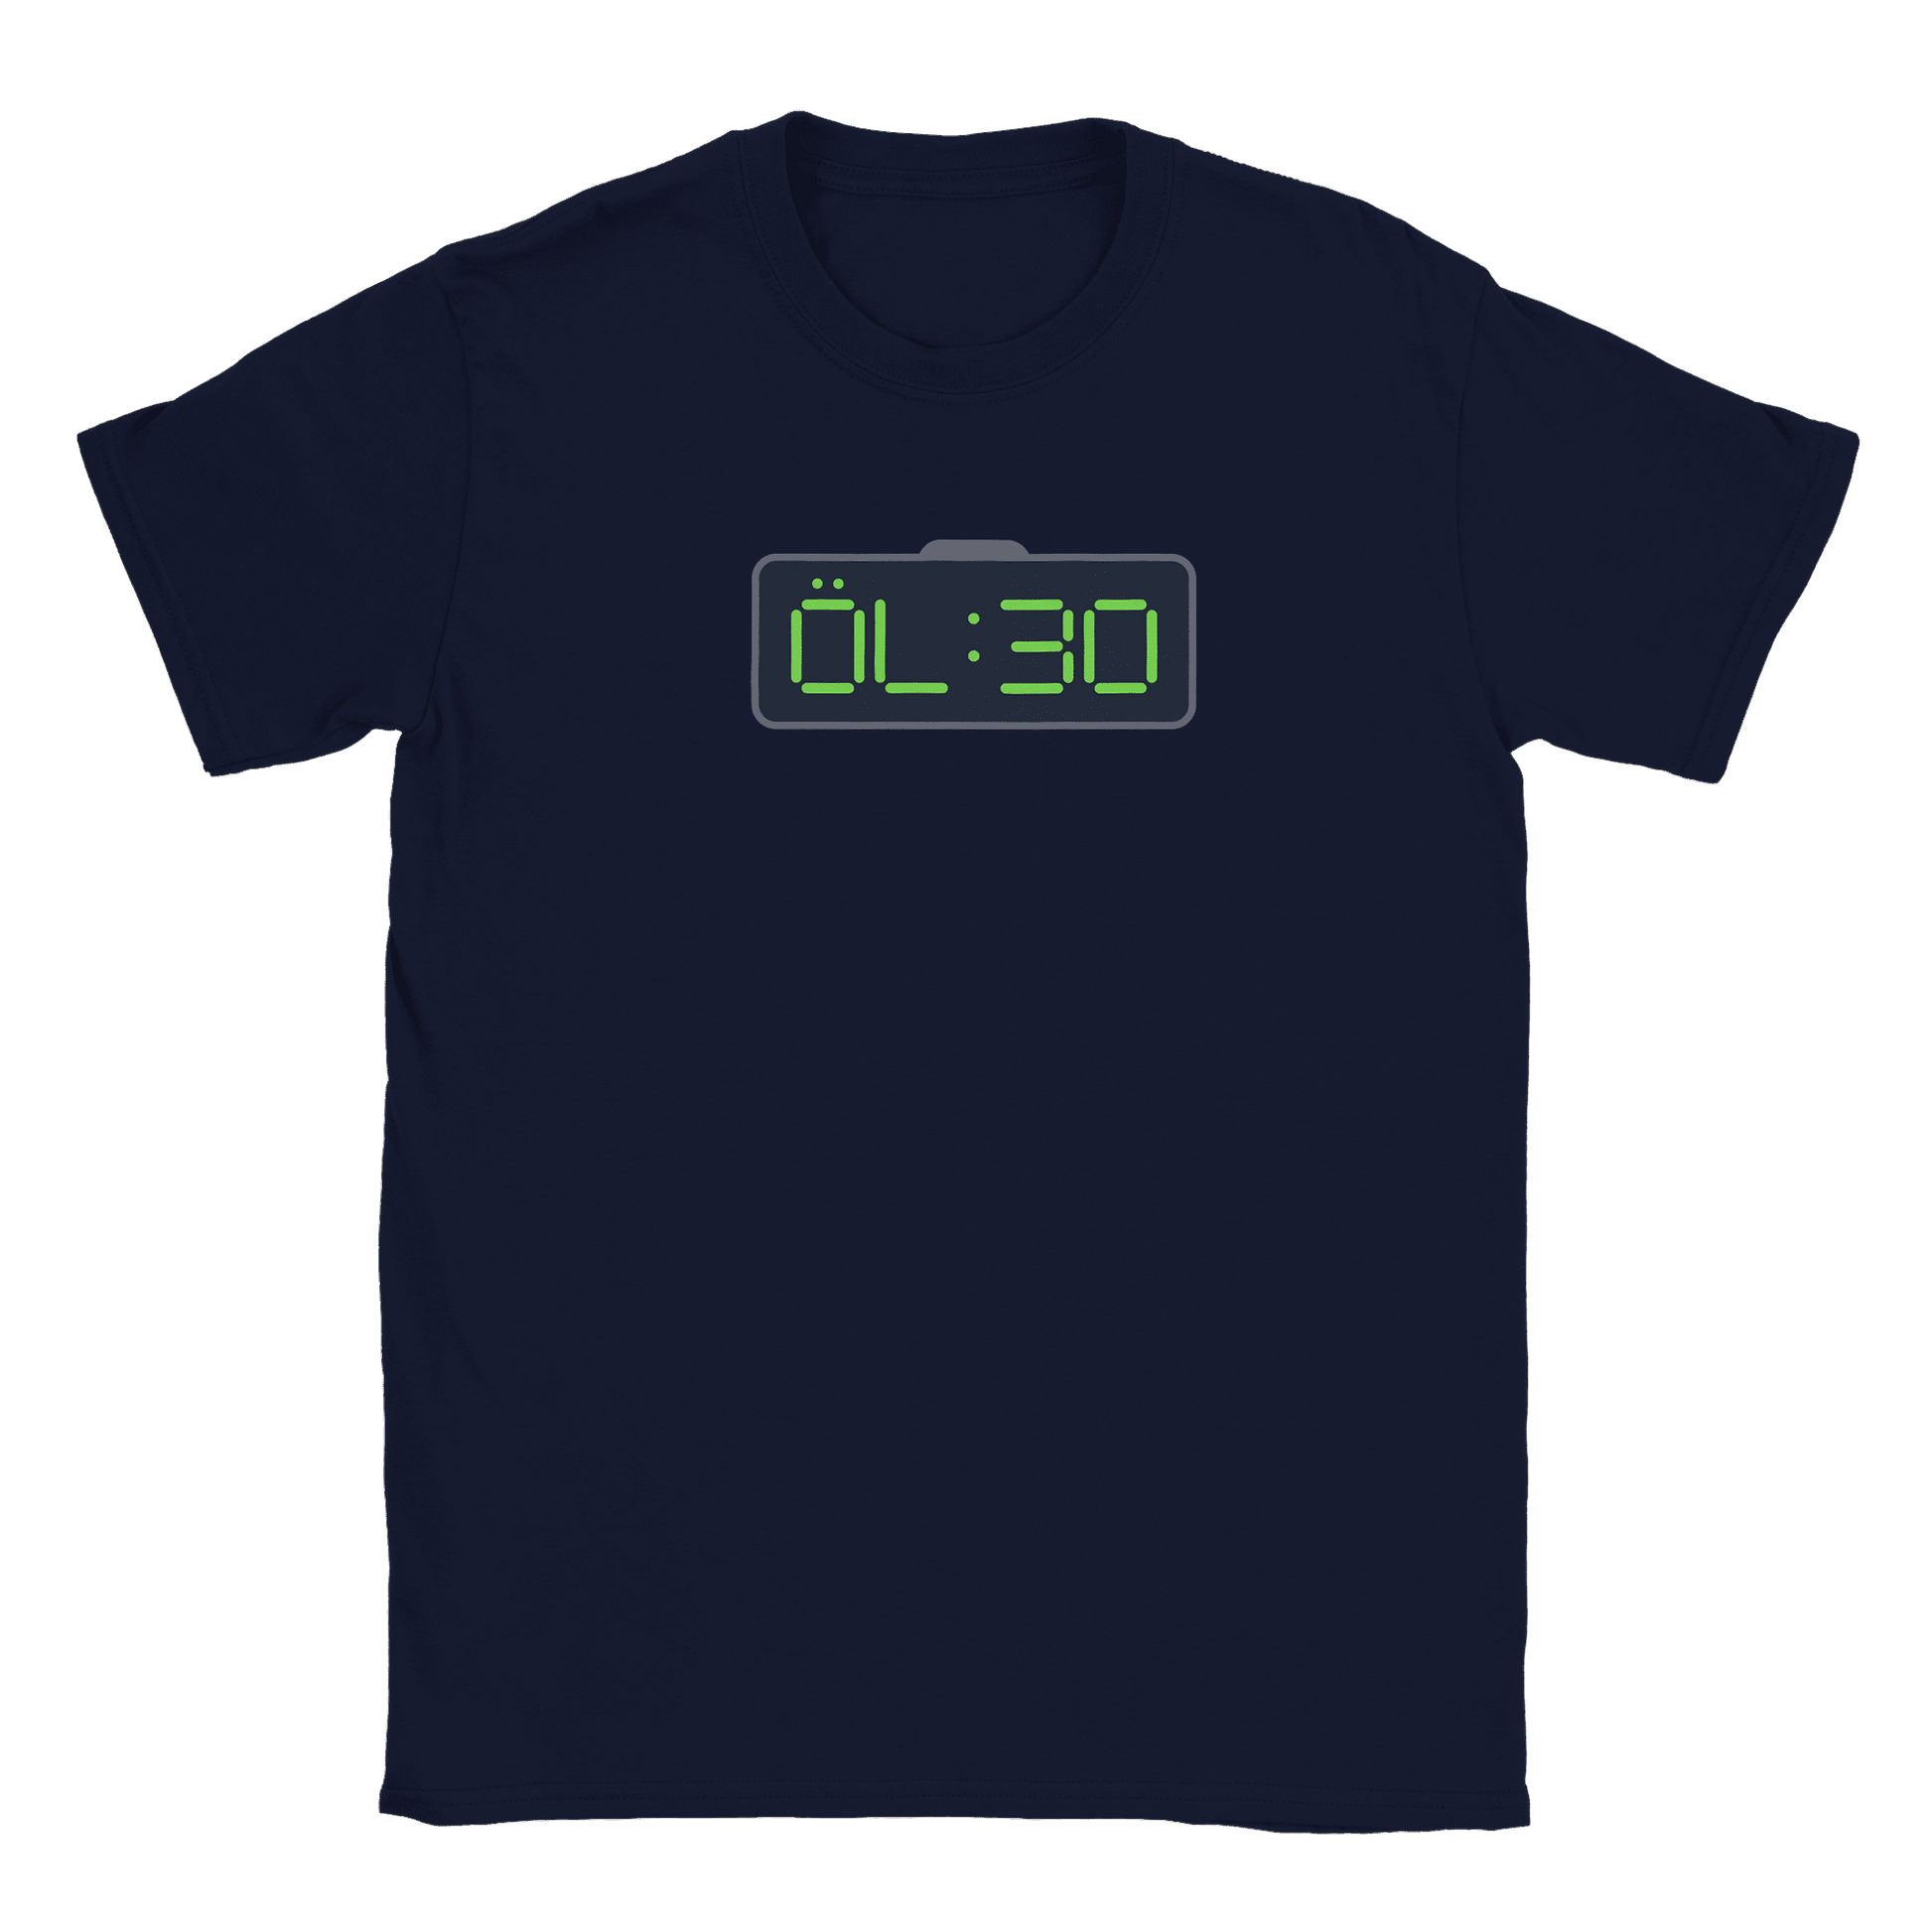 ÖL 30 - T-shirt Navy